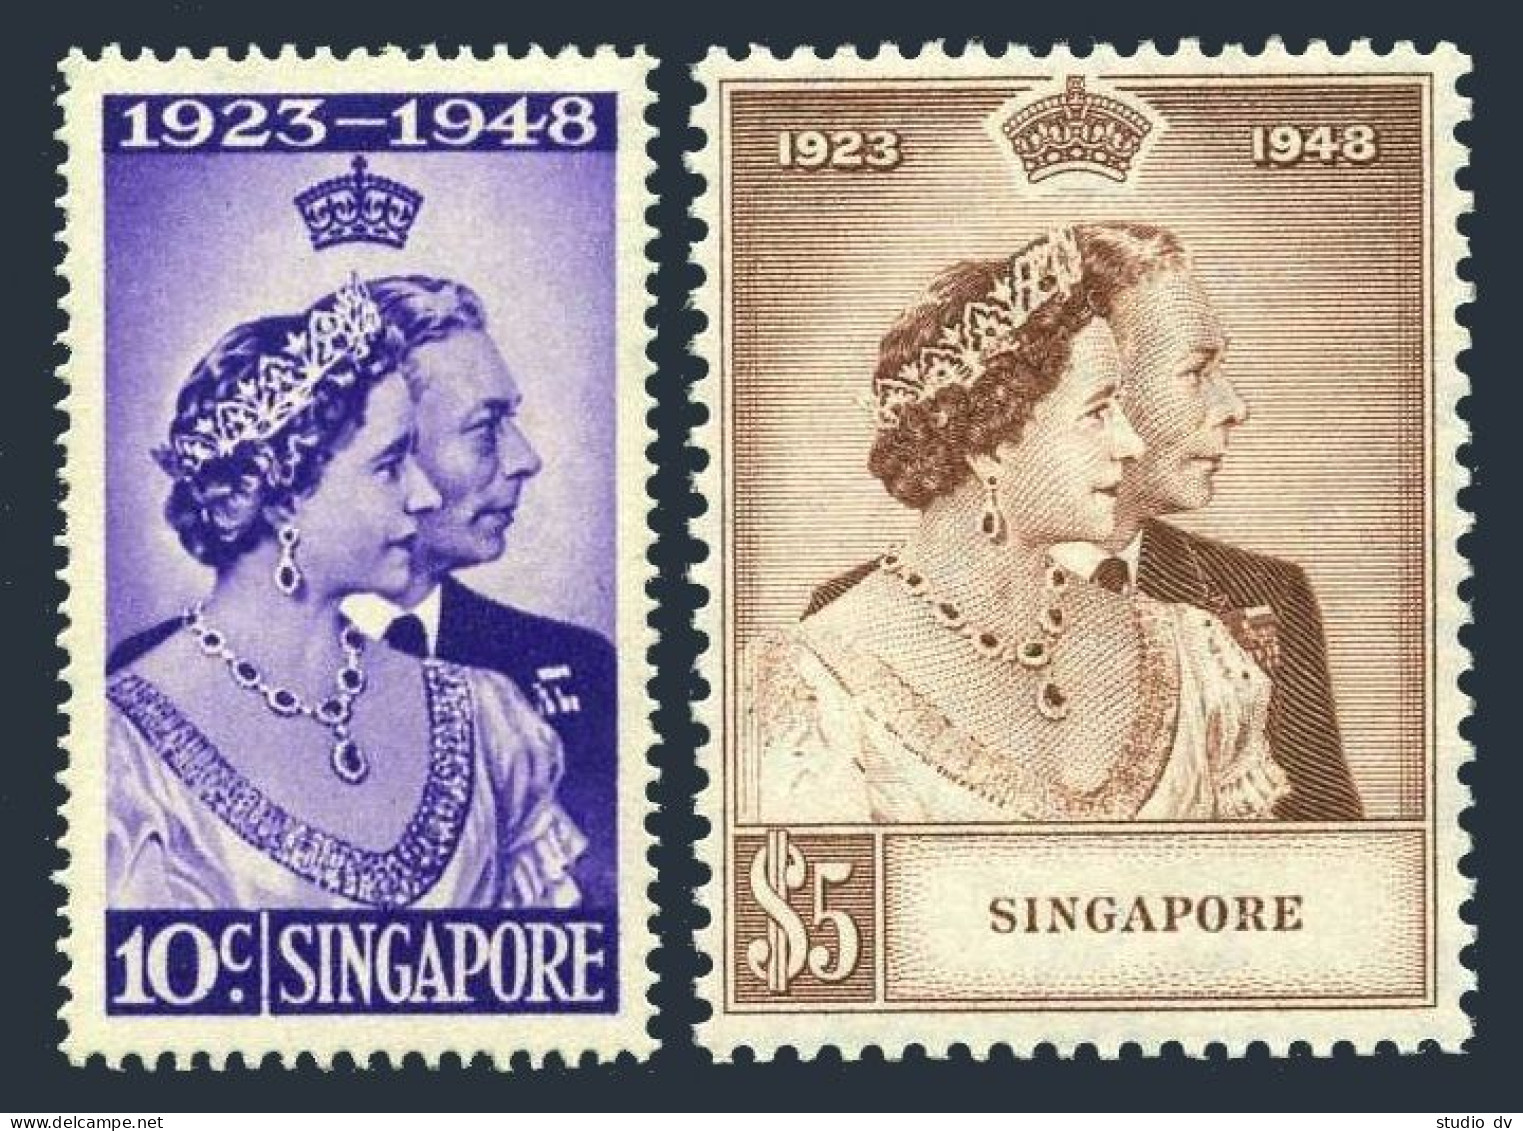 Singapore 21-22, Hinged. Mi 21-22. Silver Wedding, 1948. George VI, Elizabeth. - Singapur (1959-...)